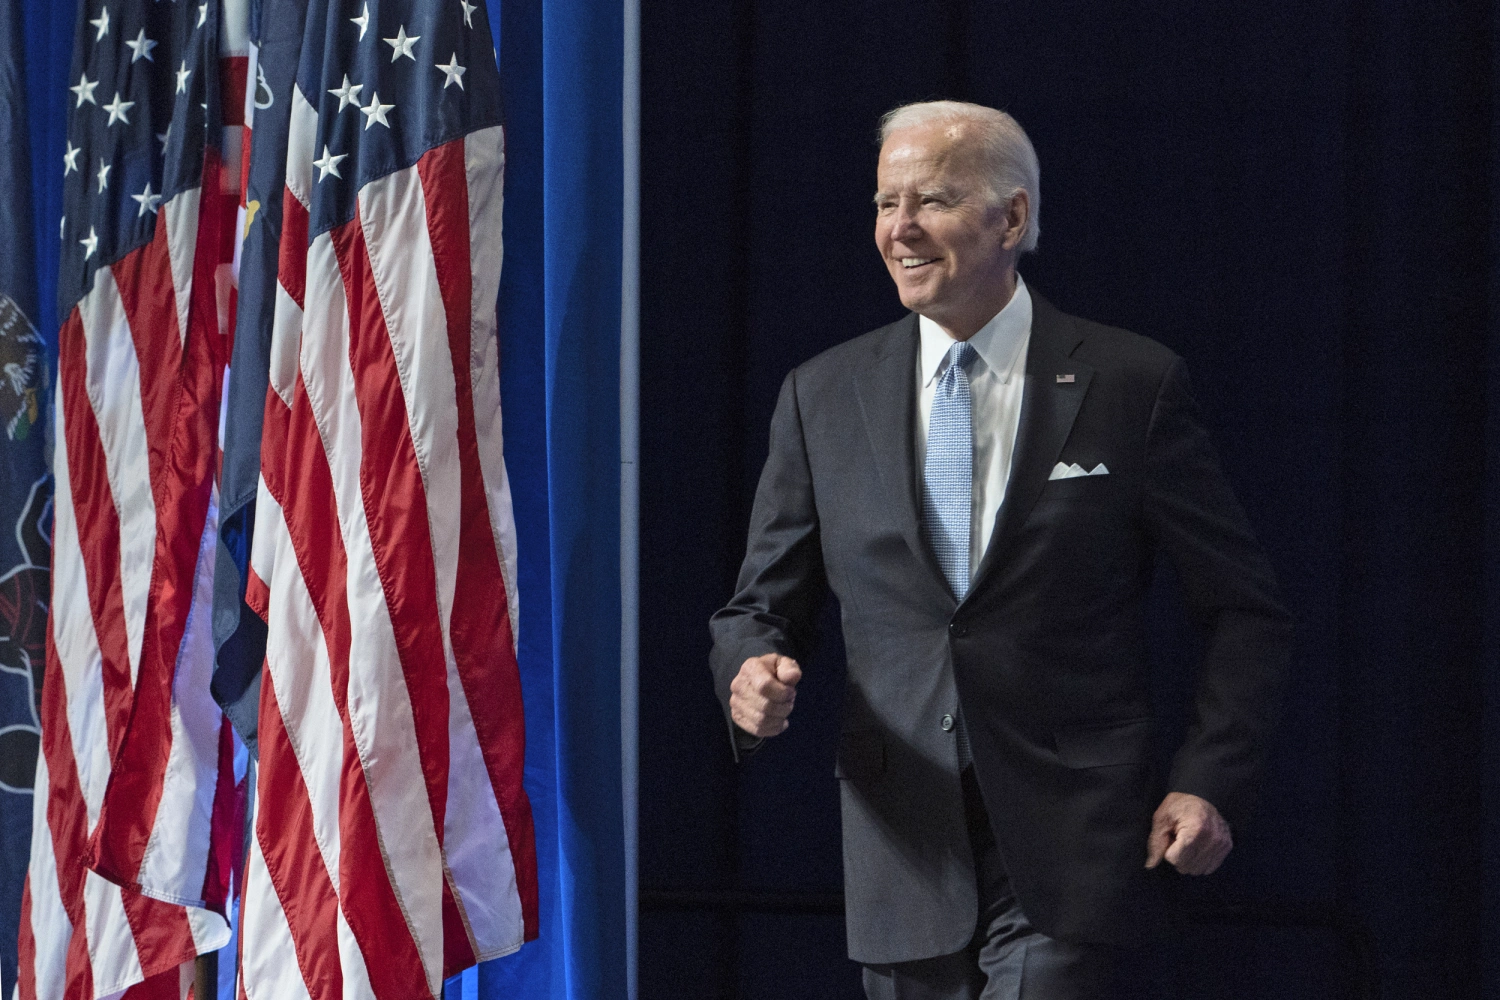 Biden's campaign amasses historic $187 million (Credits: NBC News)